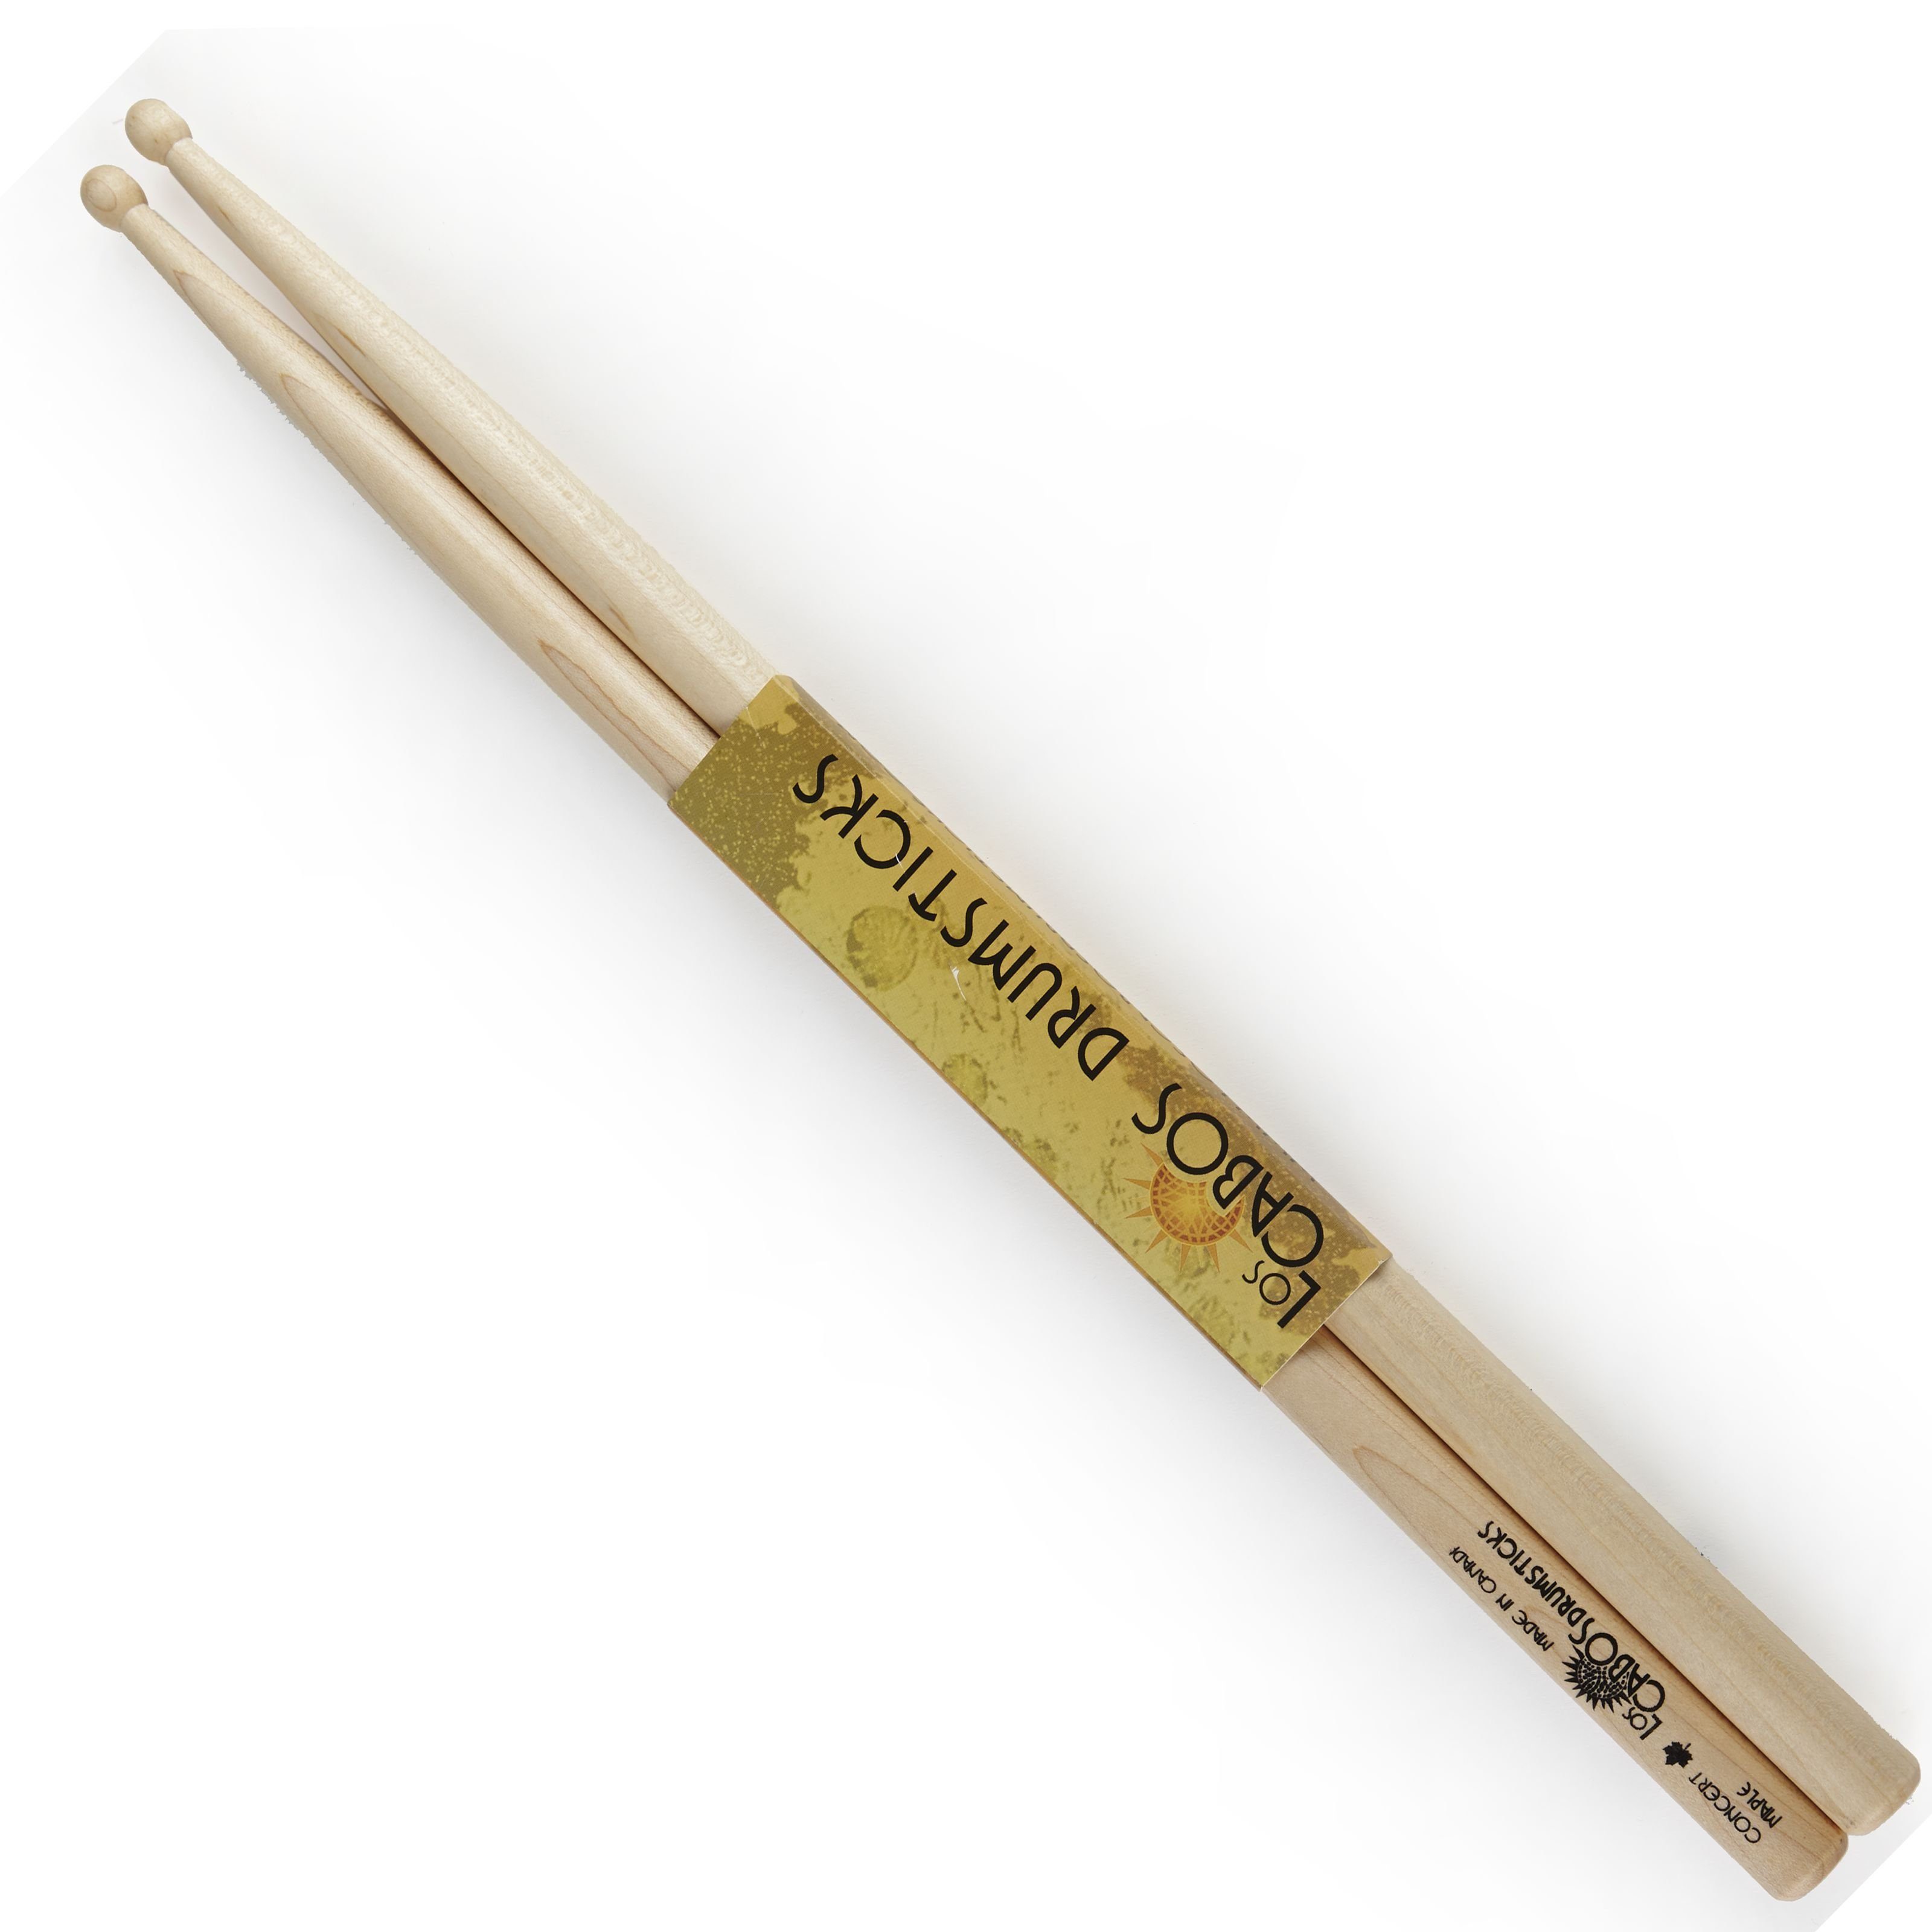 Los Cabos Drumsticks (Concert Maple Sticks, Wood Tip, Sticks, Beater und Mallets, Drumsticks Holztip), Concert Maple Sticks, Wood Tip - Drumsticks